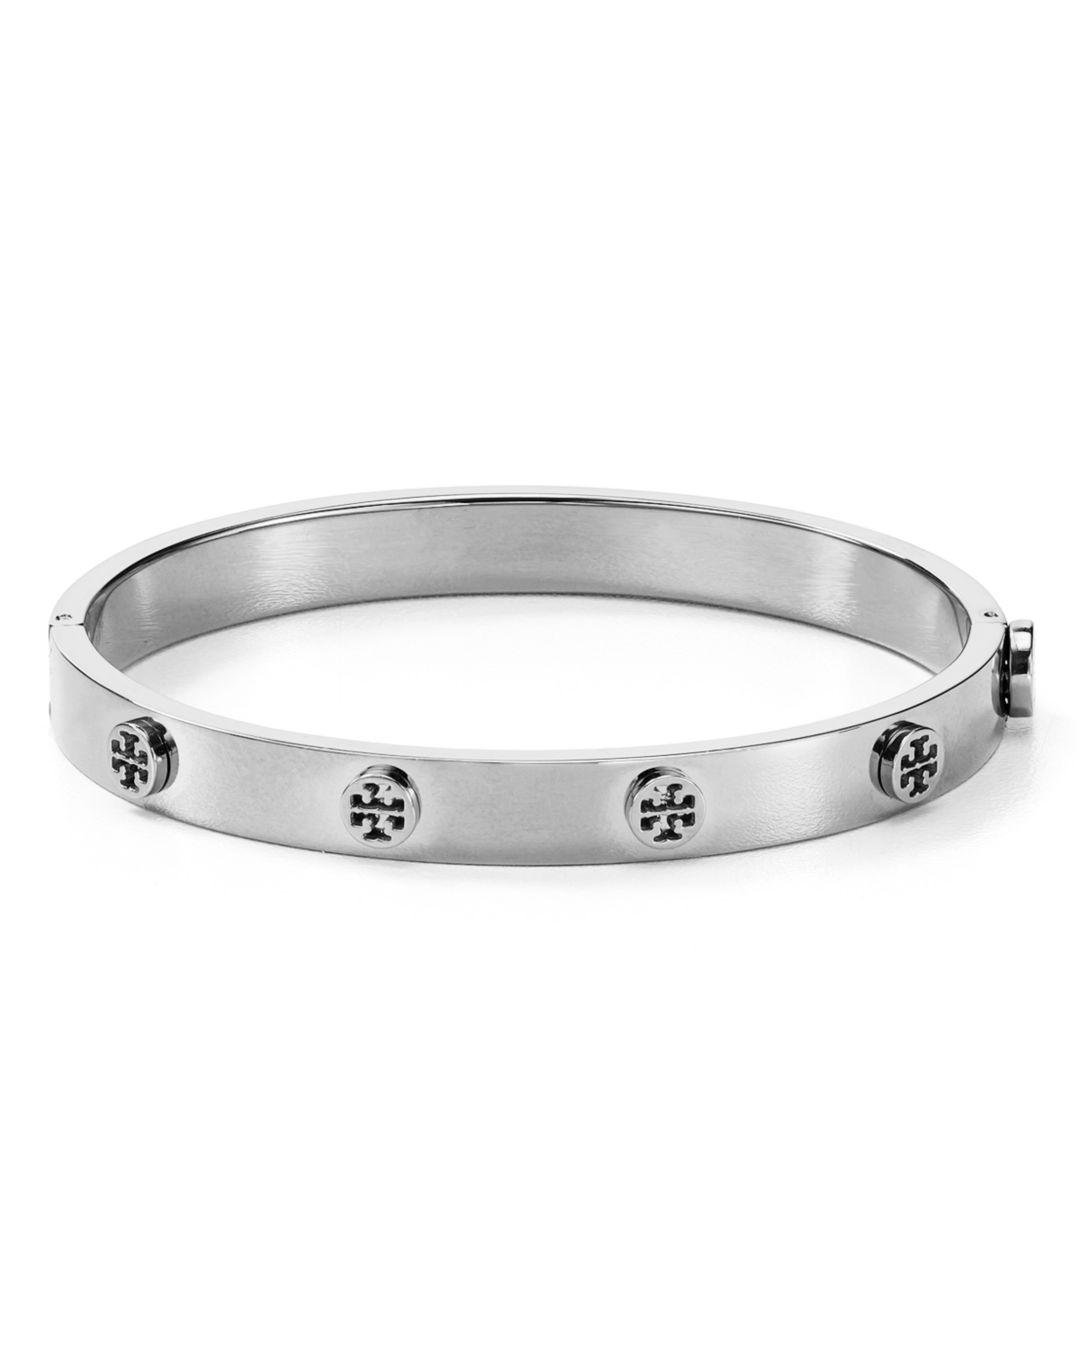 Tory Burch Miller Stud Hinge Bracelet in Silver (Metallic) - Save 36%